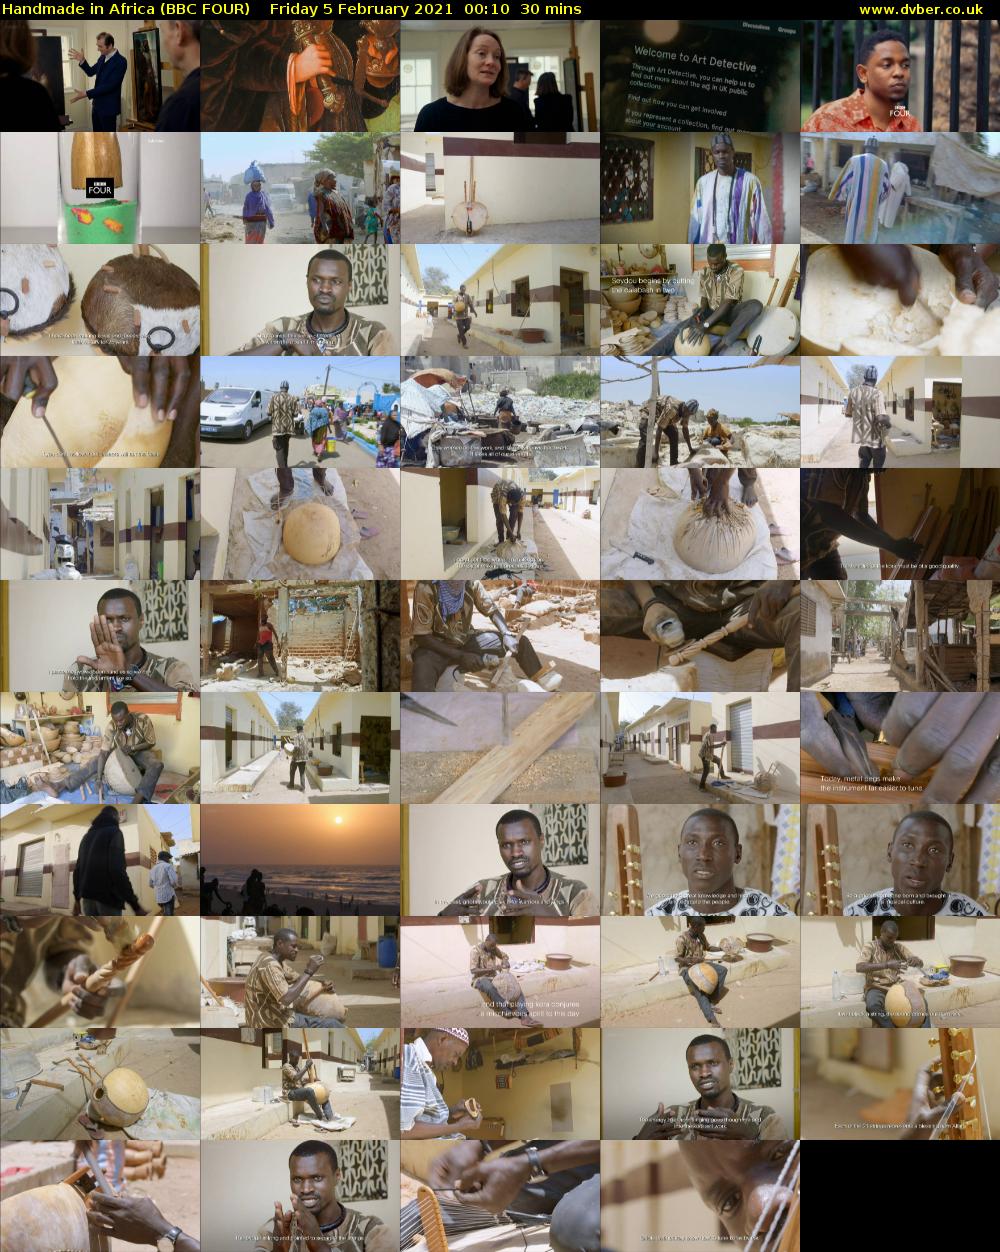 Handmade in Africa (BBC FOUR) Friday 5 February 2021 00:10 - 00:40